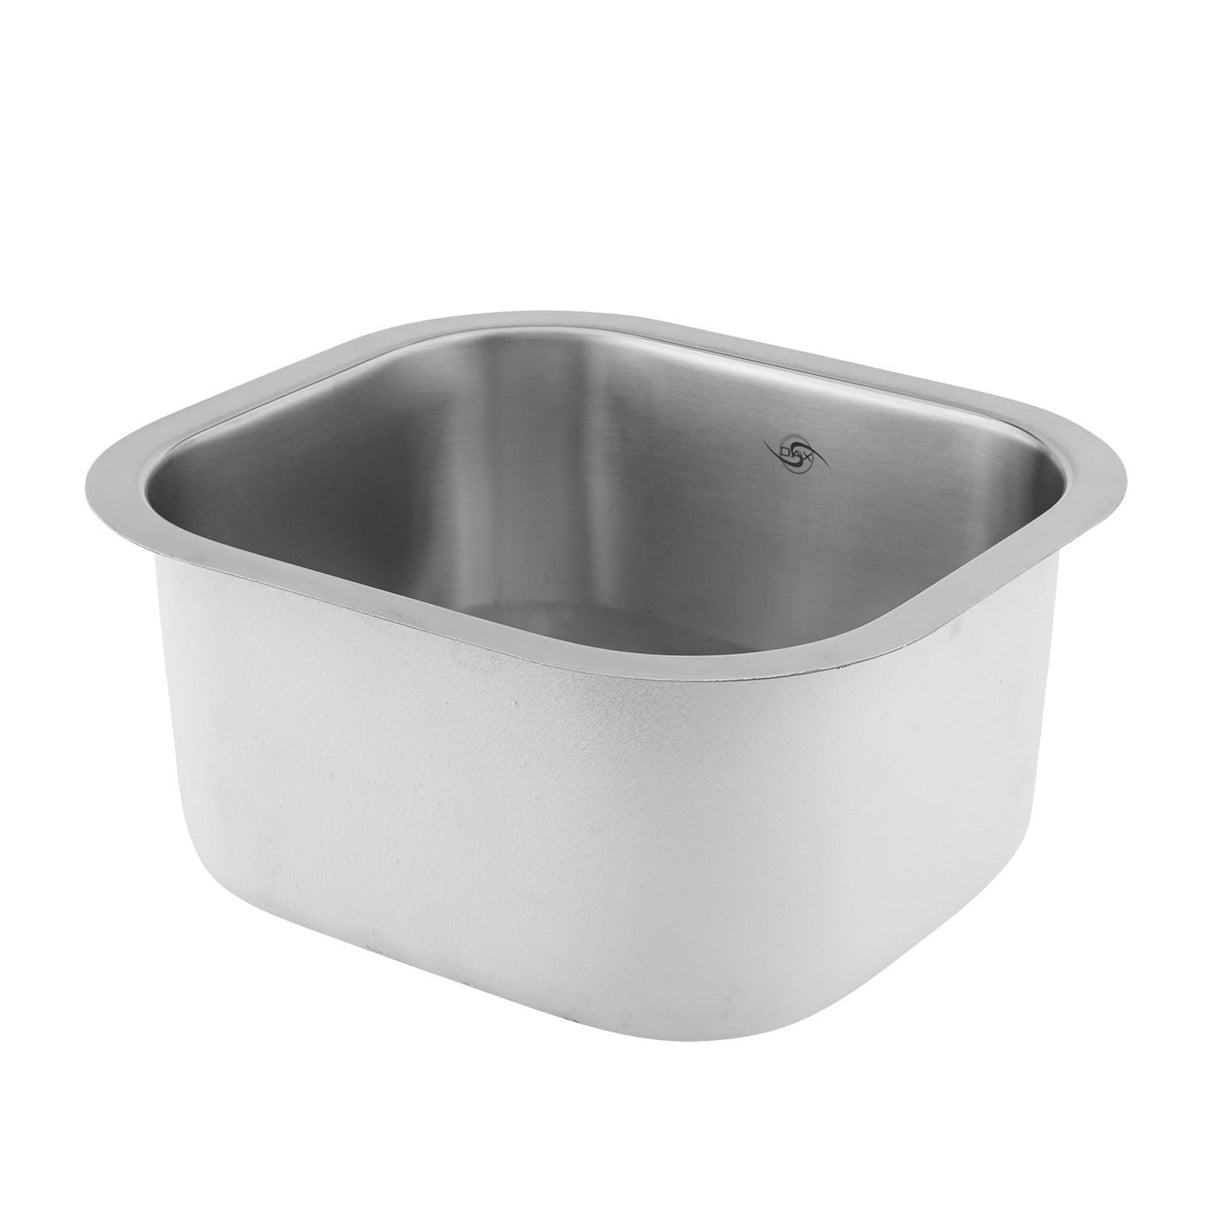 DAX Stainless Steel Single Bowl Undermount Kitchen Sink, Brushed Stainless Steel DAX-1214